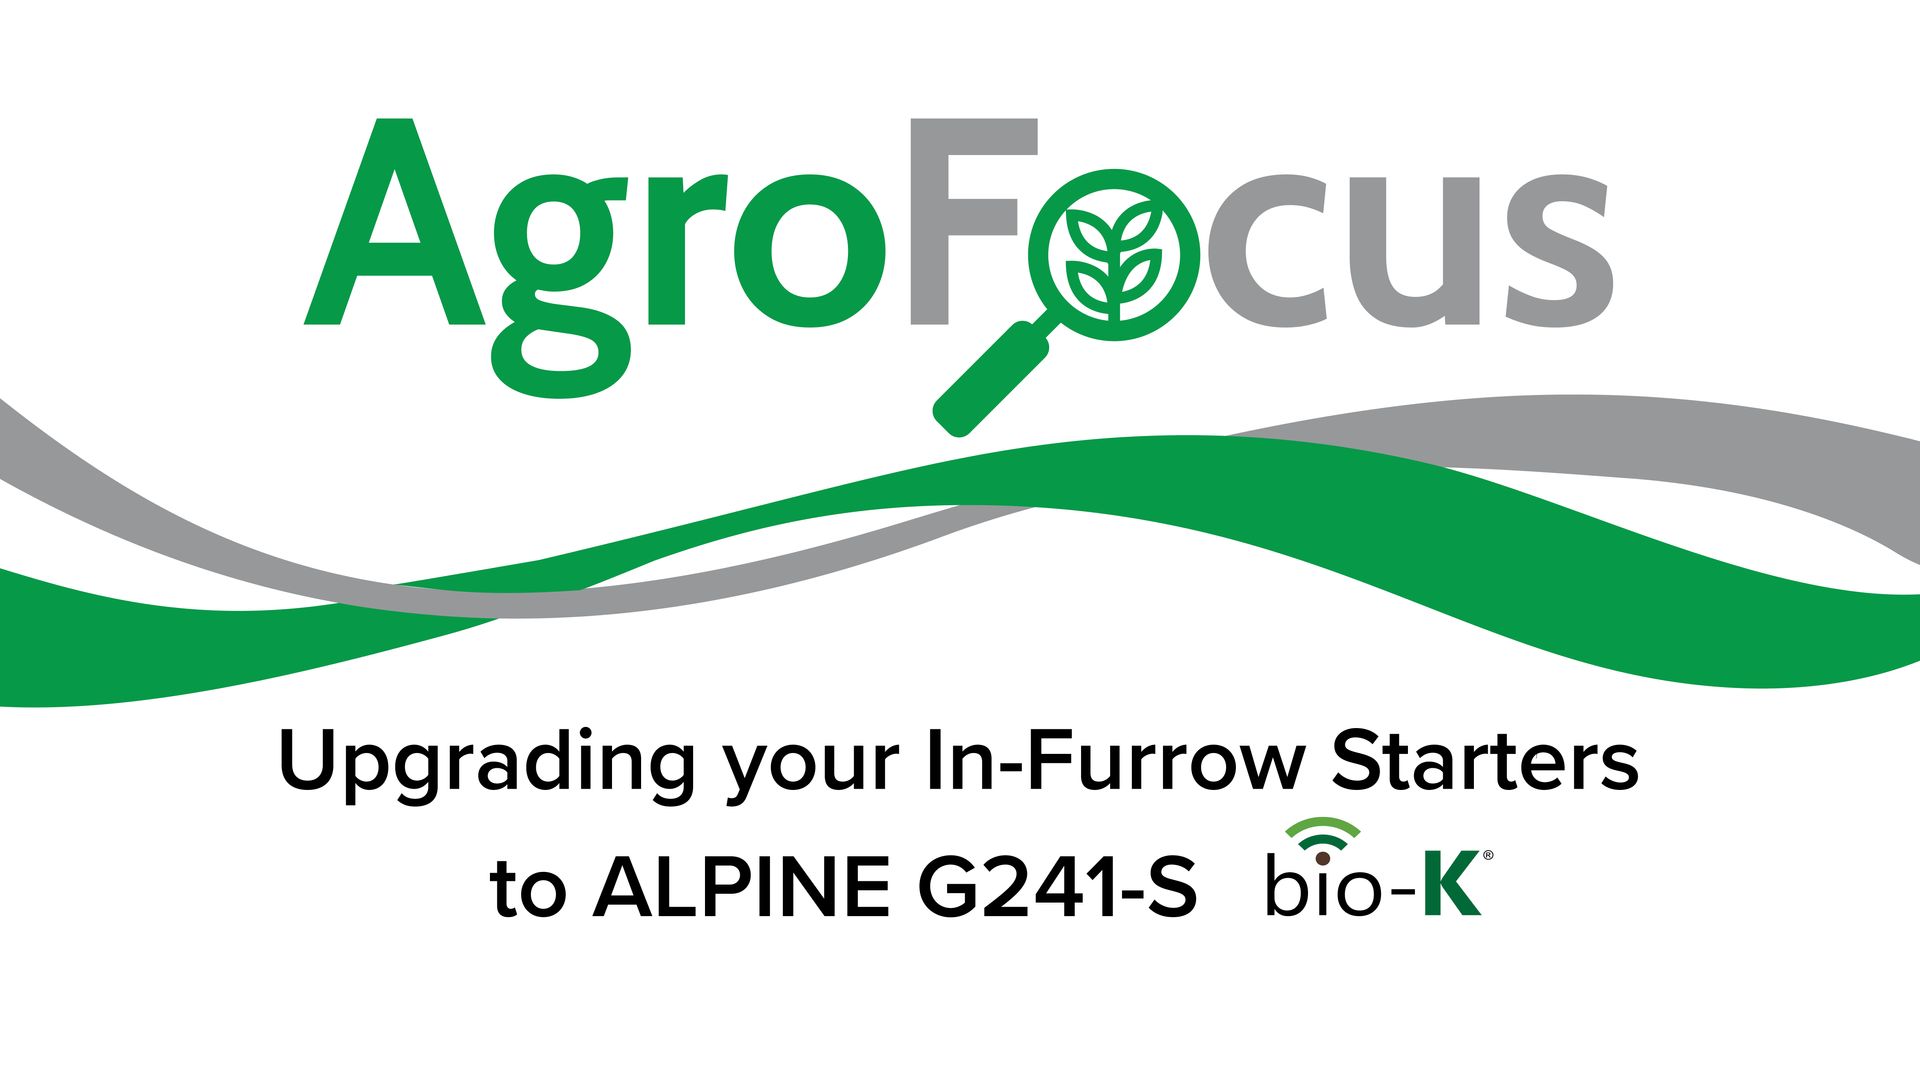 ALPINE Liquid Fertilizer Blog